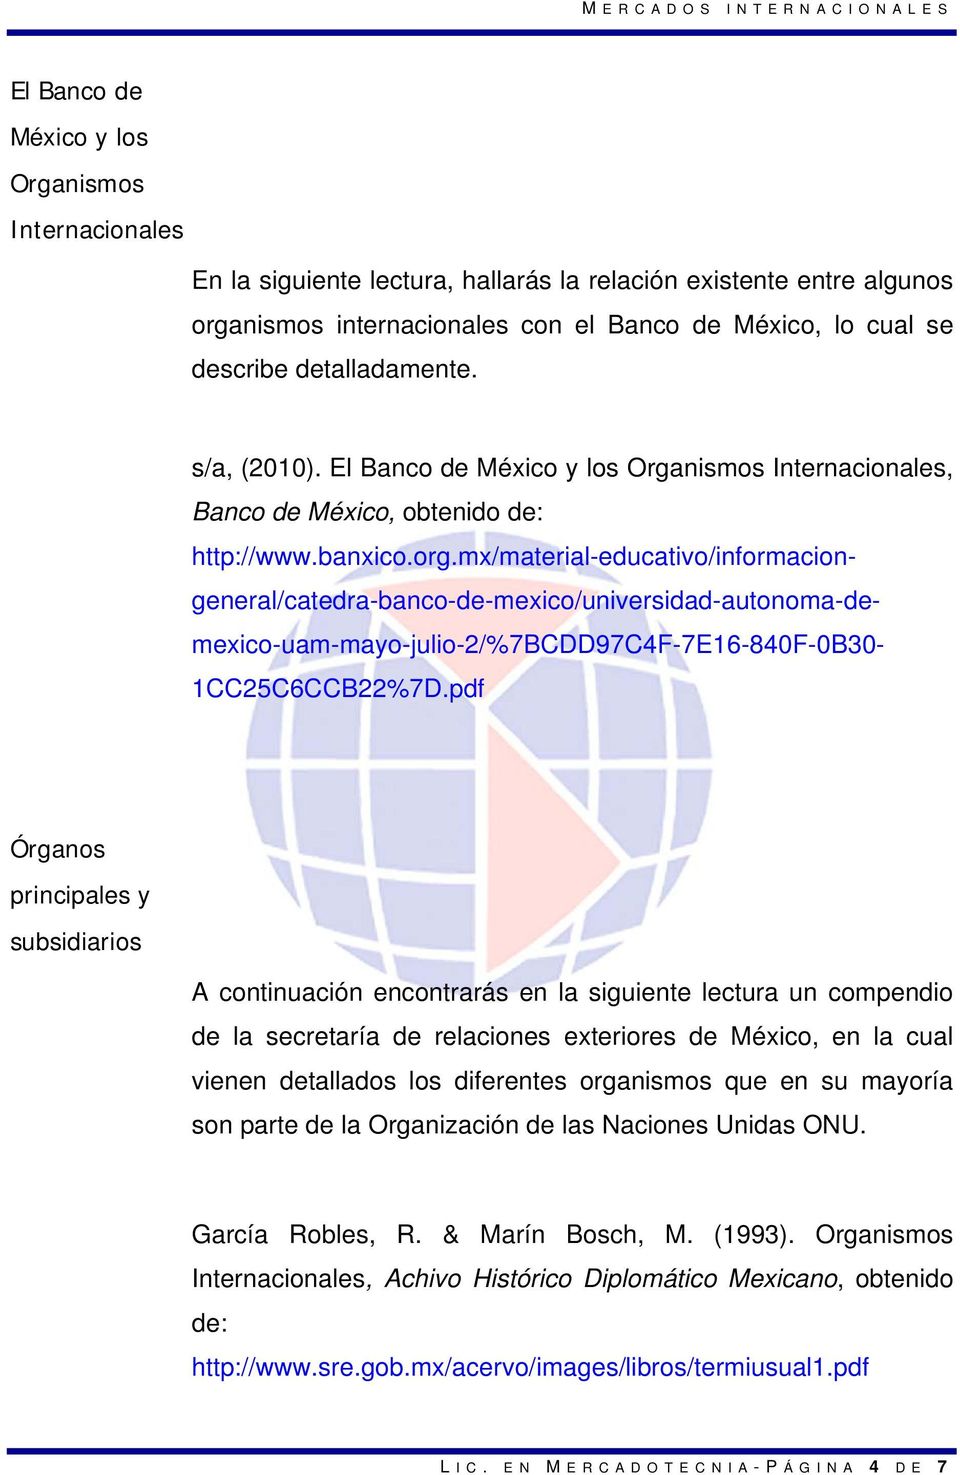 mx/material-educativo/informaciongeneral/catedra-banco-de-mexico/universidad-autonoma-demexico-uam-mayo-julio-2/%7bcdd97c4f-7e16-840f-0b30-1cc25c6ccb22%7d.